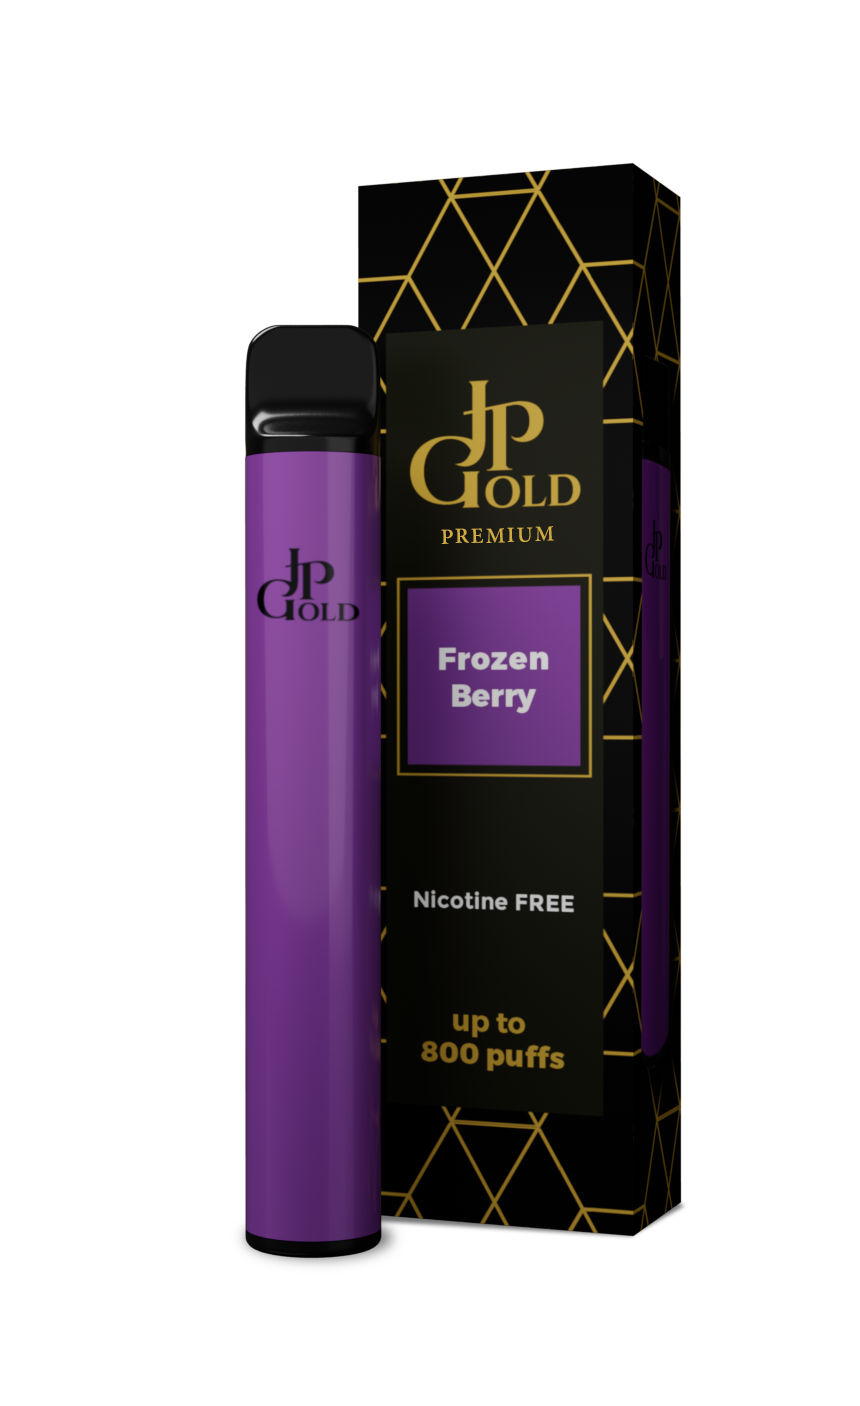 JP Gold Premium stick - Frozen Berry - Nicotine free